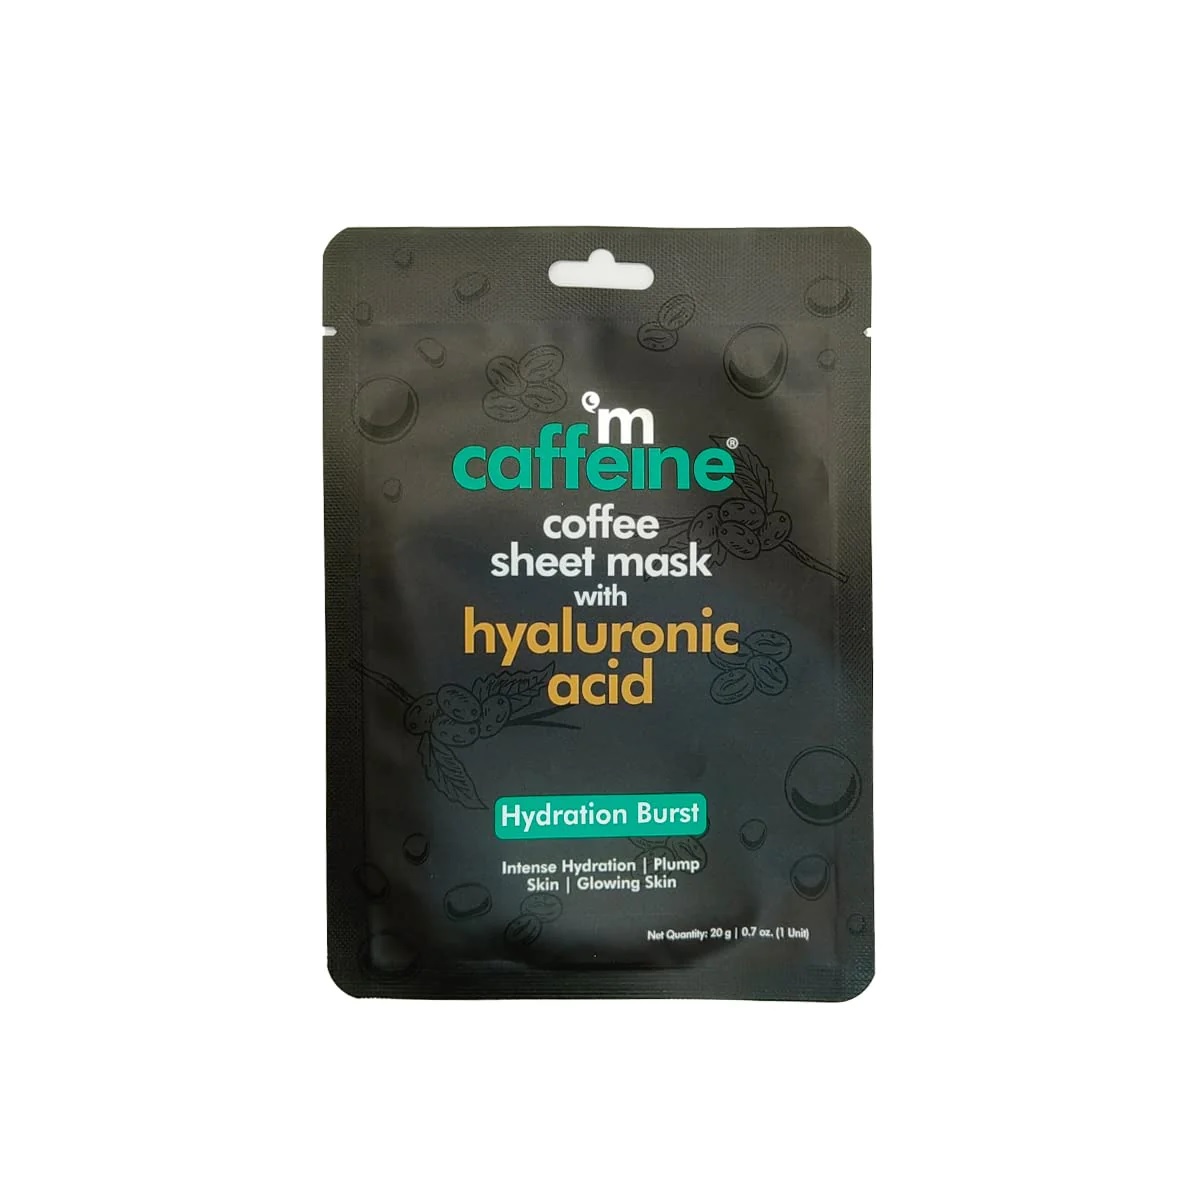 MCaffeine Hyaluronic Acid Coffee Sheet Mask for Hydration Burst